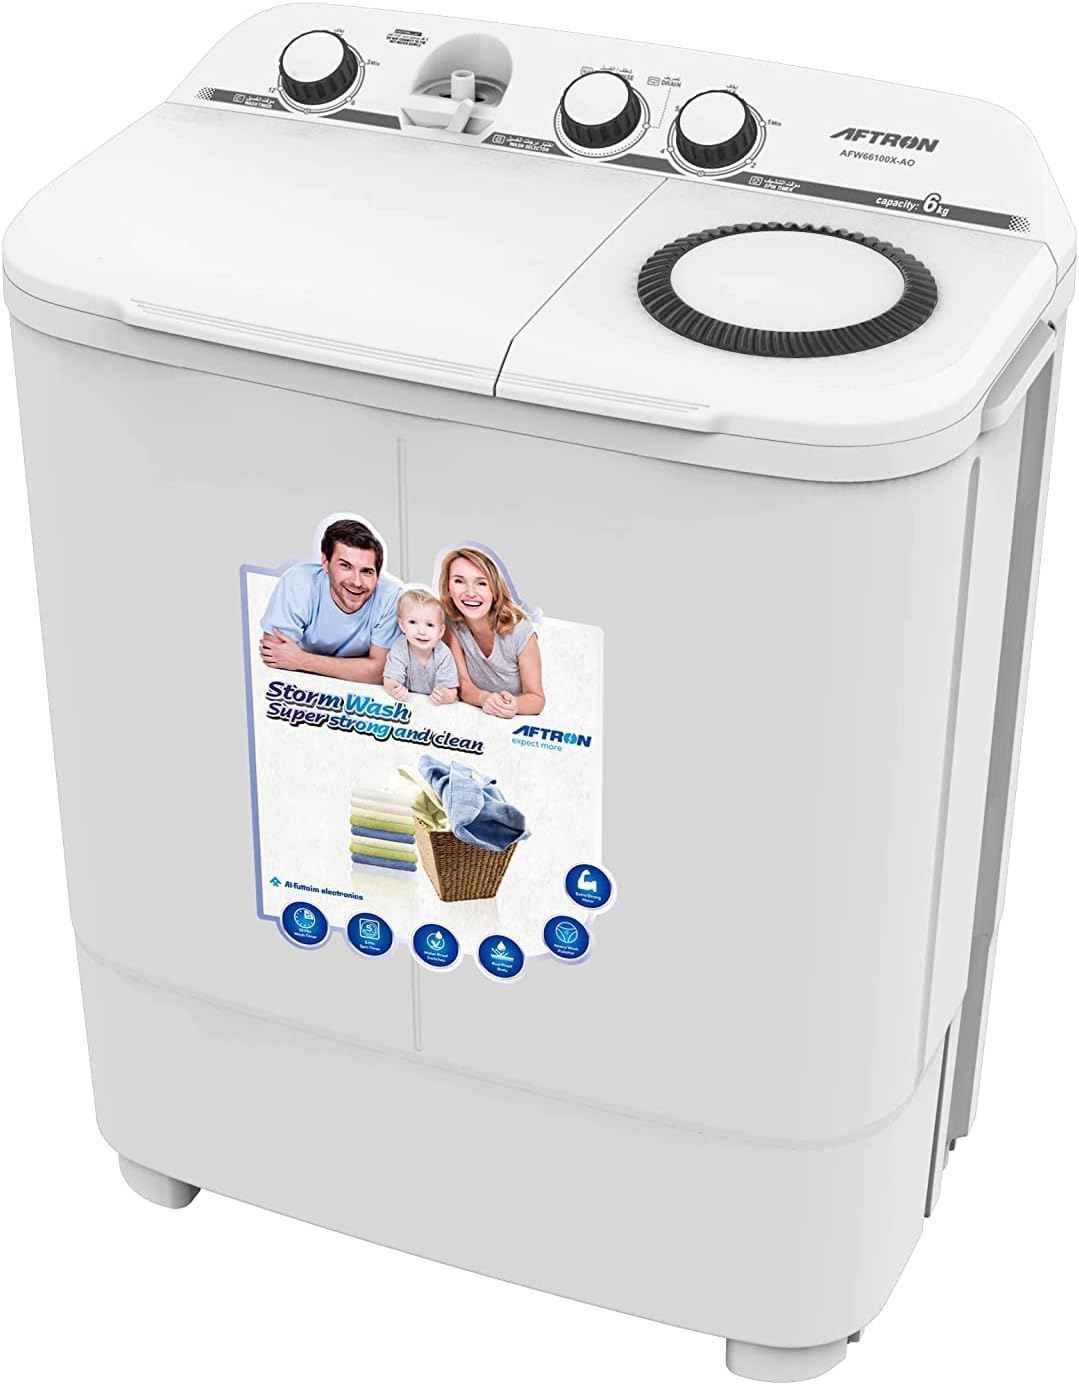 Aftron Semi Auto Washing Machine 6Kg | Home Appliances & Electronics | Halabh.com